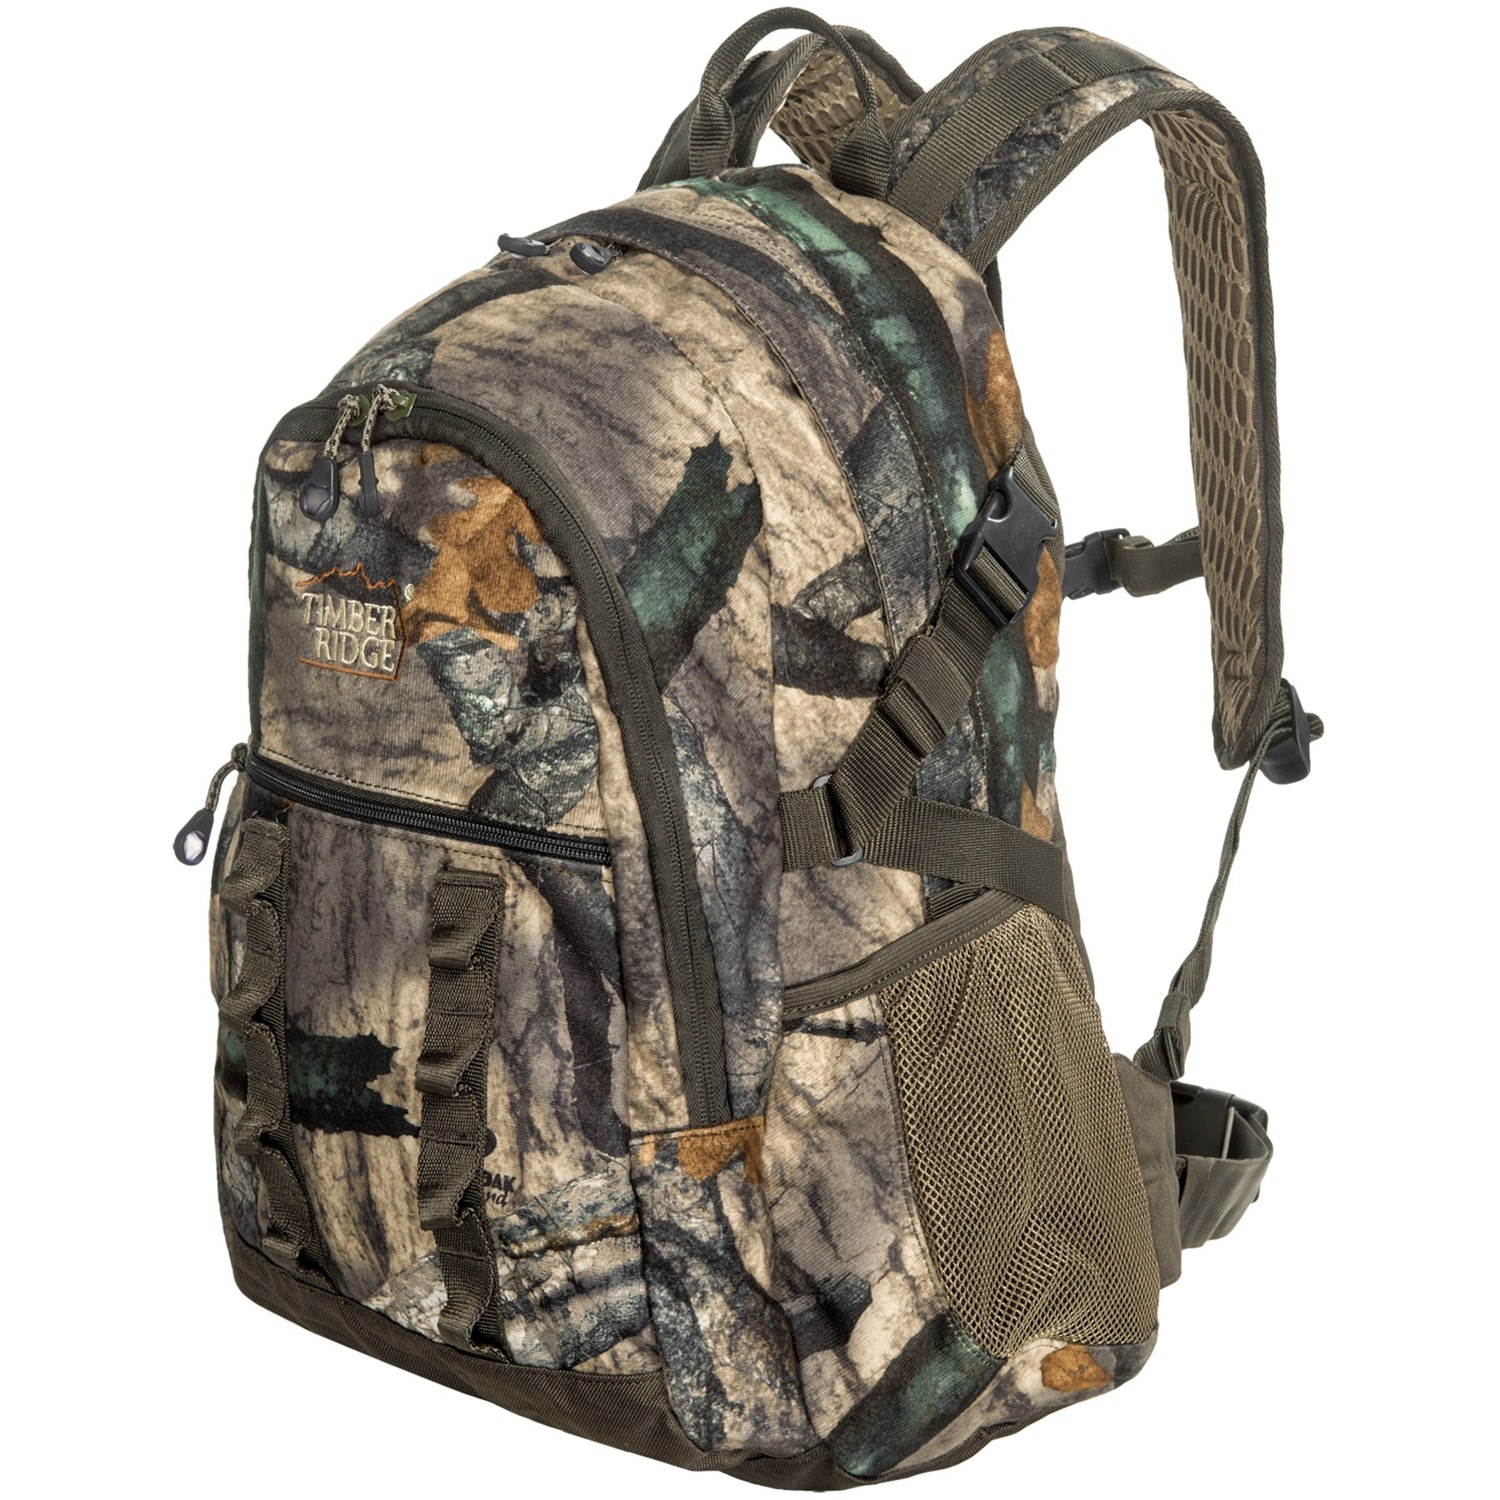 Timber Ridge Omega Backpack - Save 35%